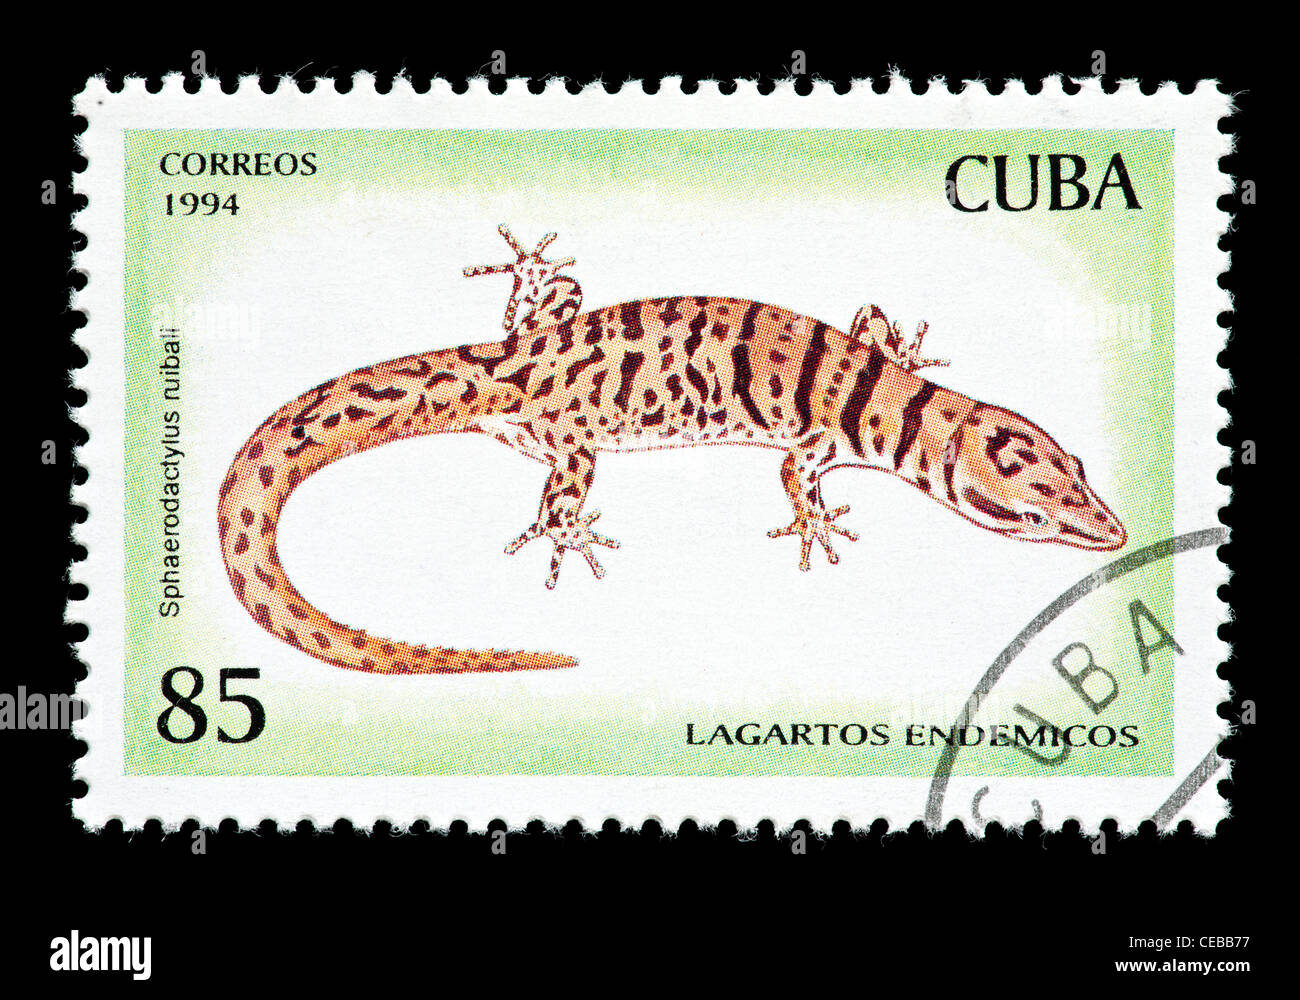 Postage stamp from Cuba depicting a Ruibal's Least Gecko  (Sphaerodactylus ruibali). Stock Photo